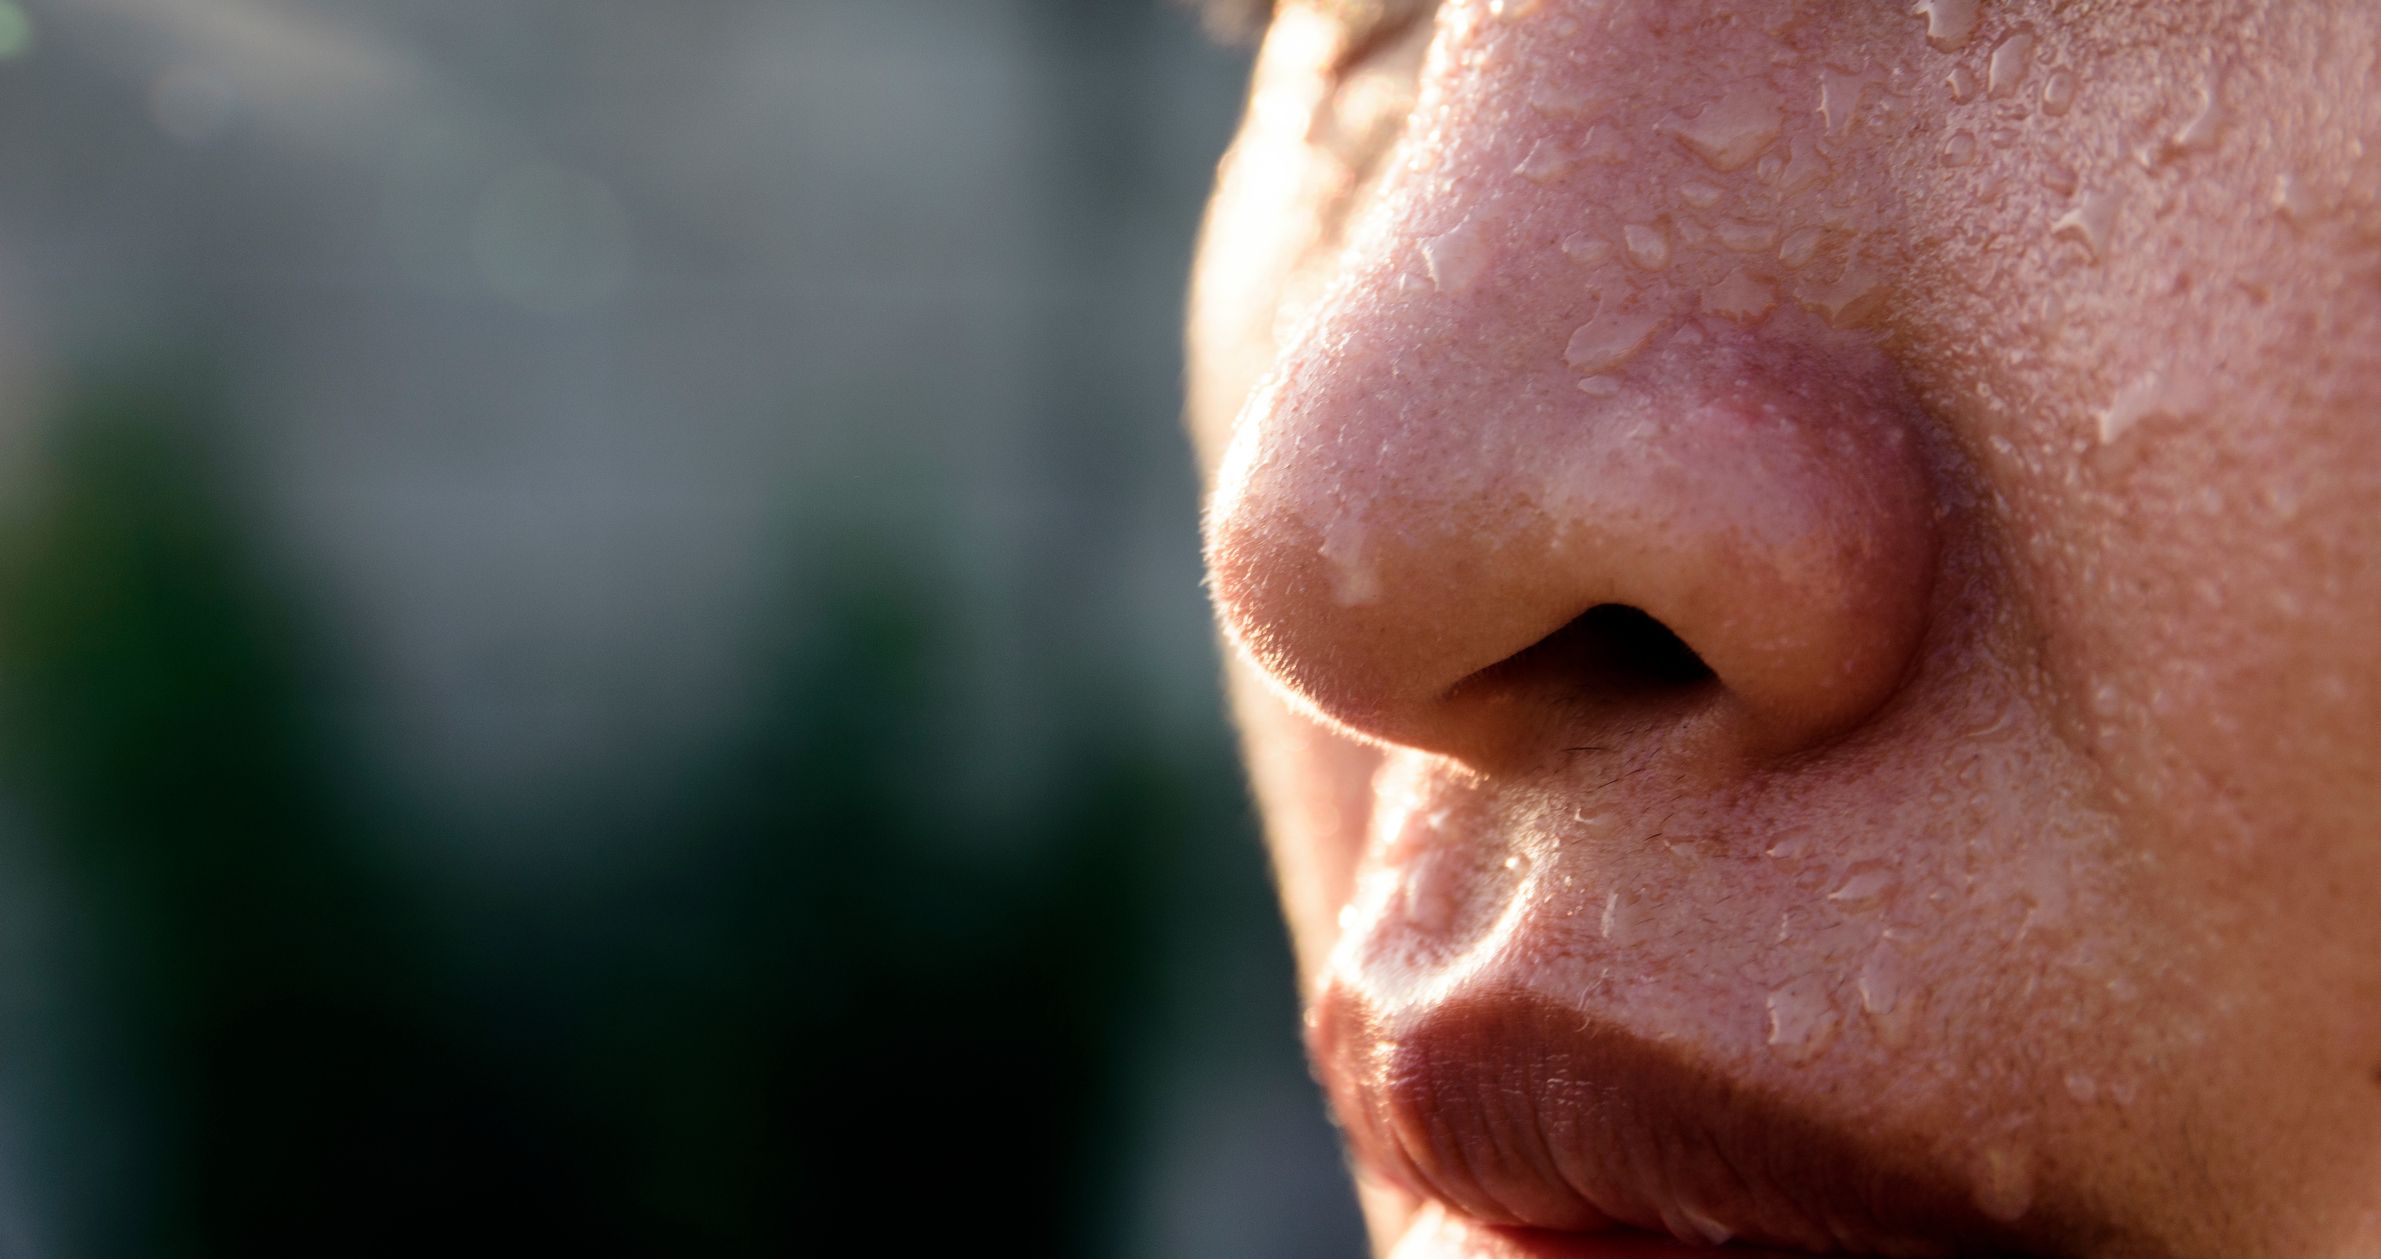 Dr. Pimple Popper Monster Milia On Woman's Nose On Instagram